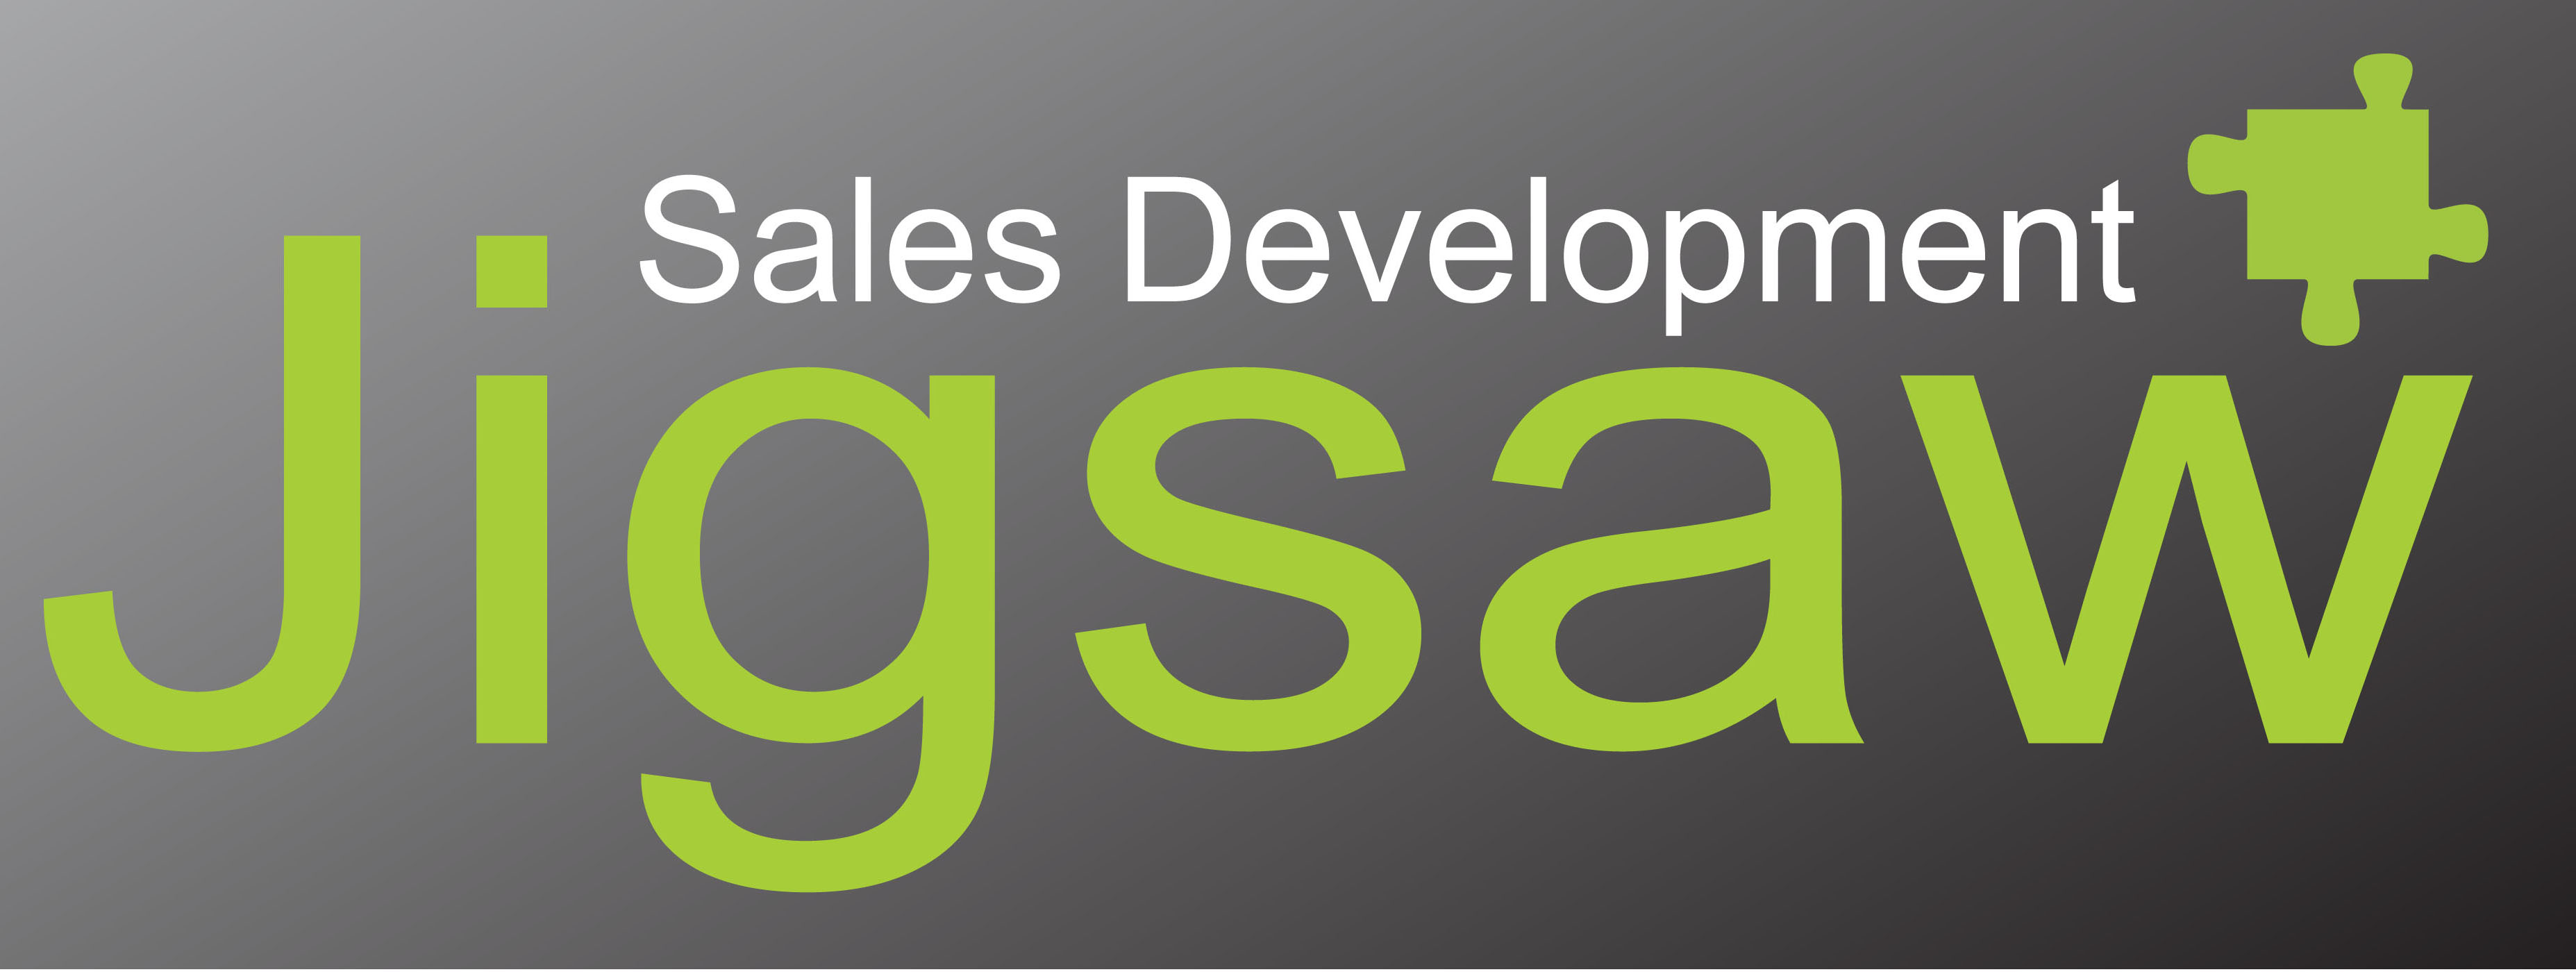 Jigsaw Sales Development